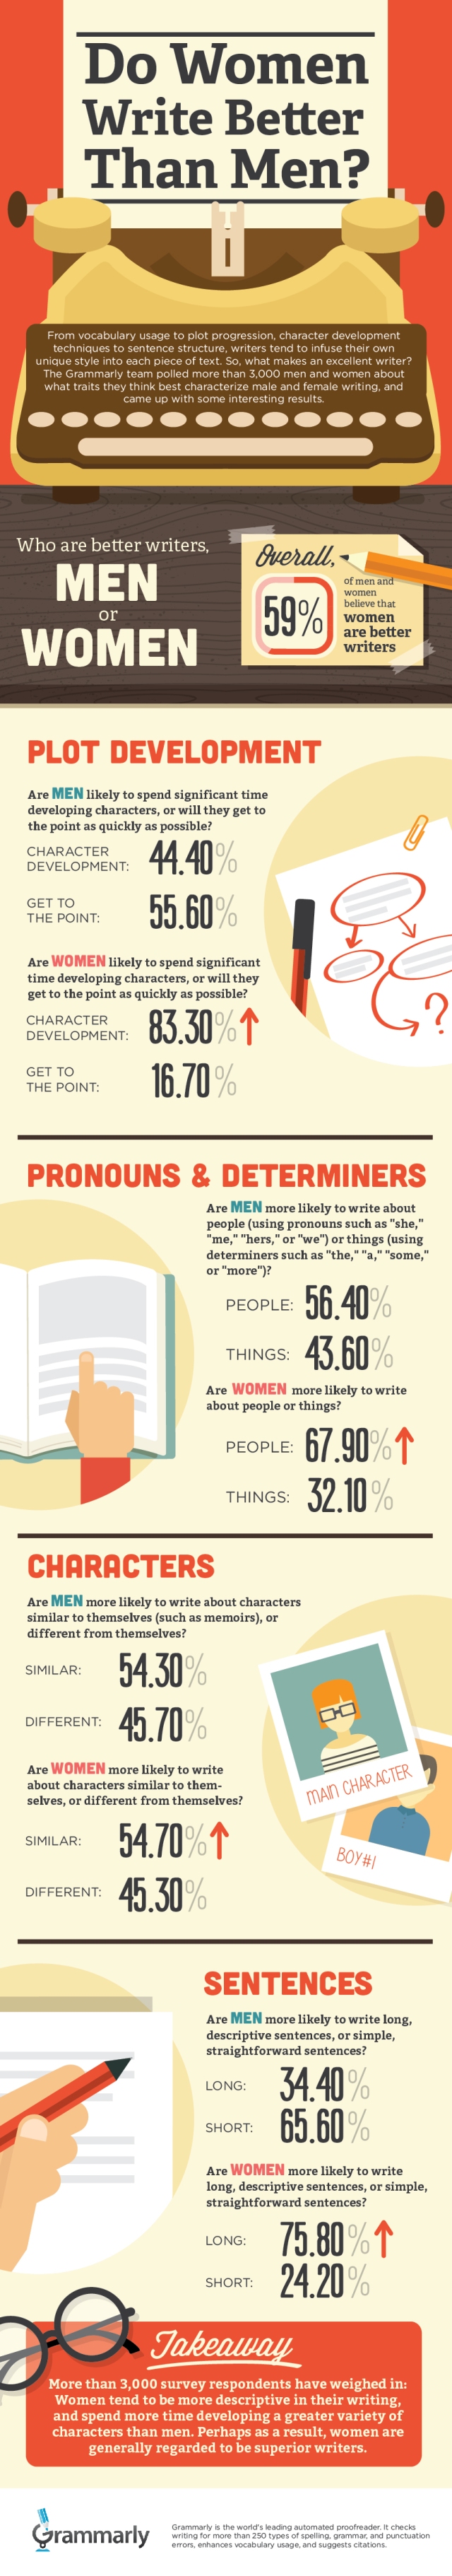 Grammarly_MenvsWomen_Writers_infographic